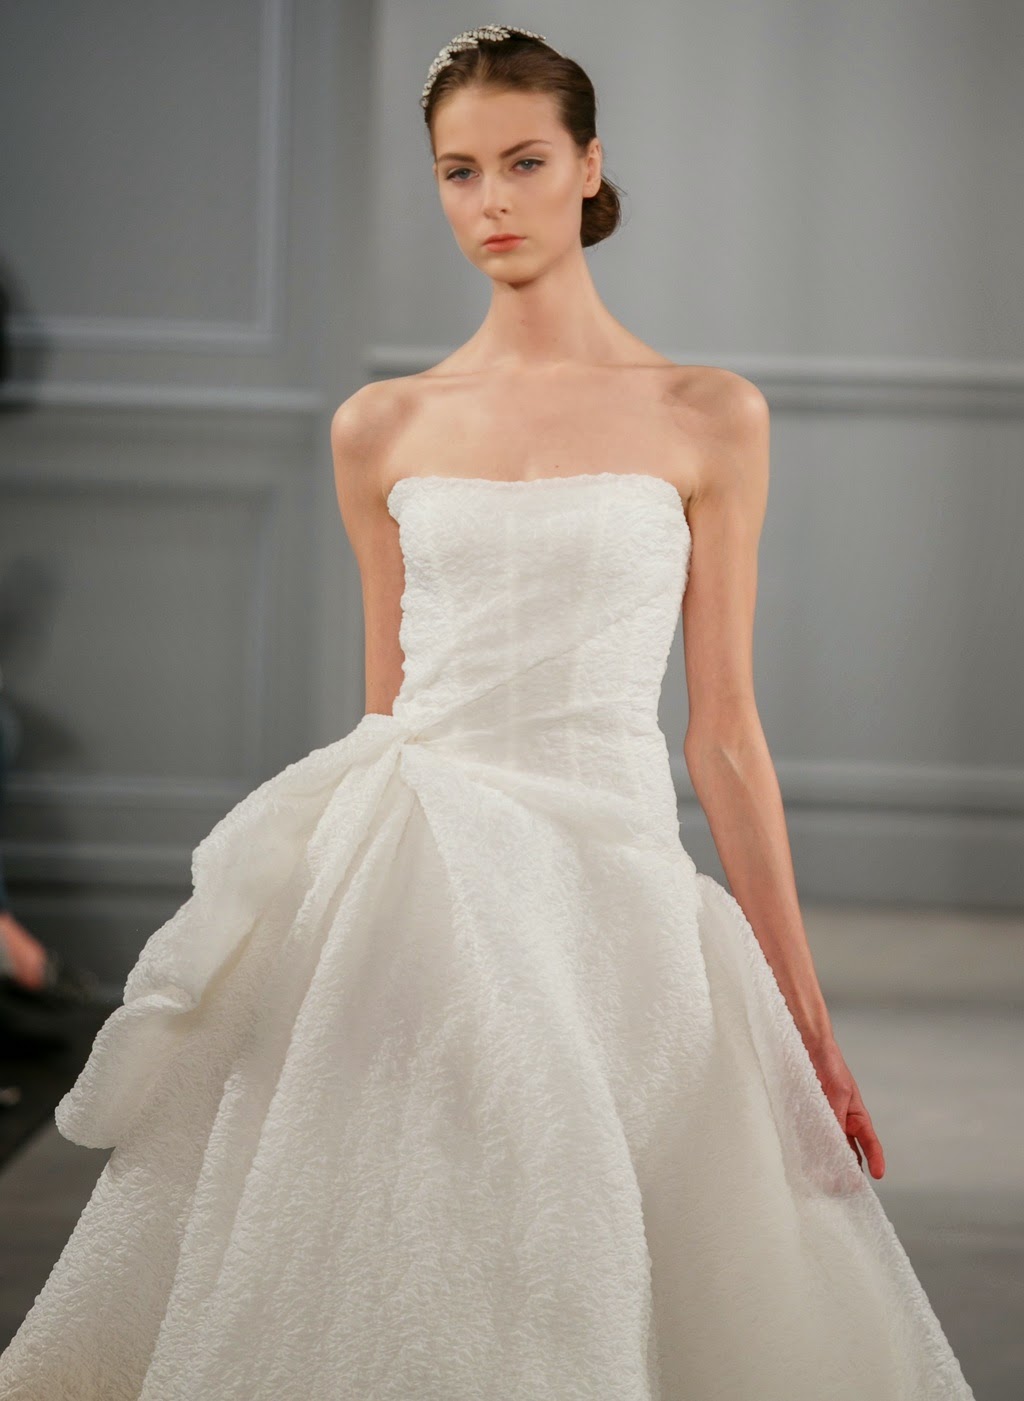 Bridesmaid Dresses 2014 Trends 2